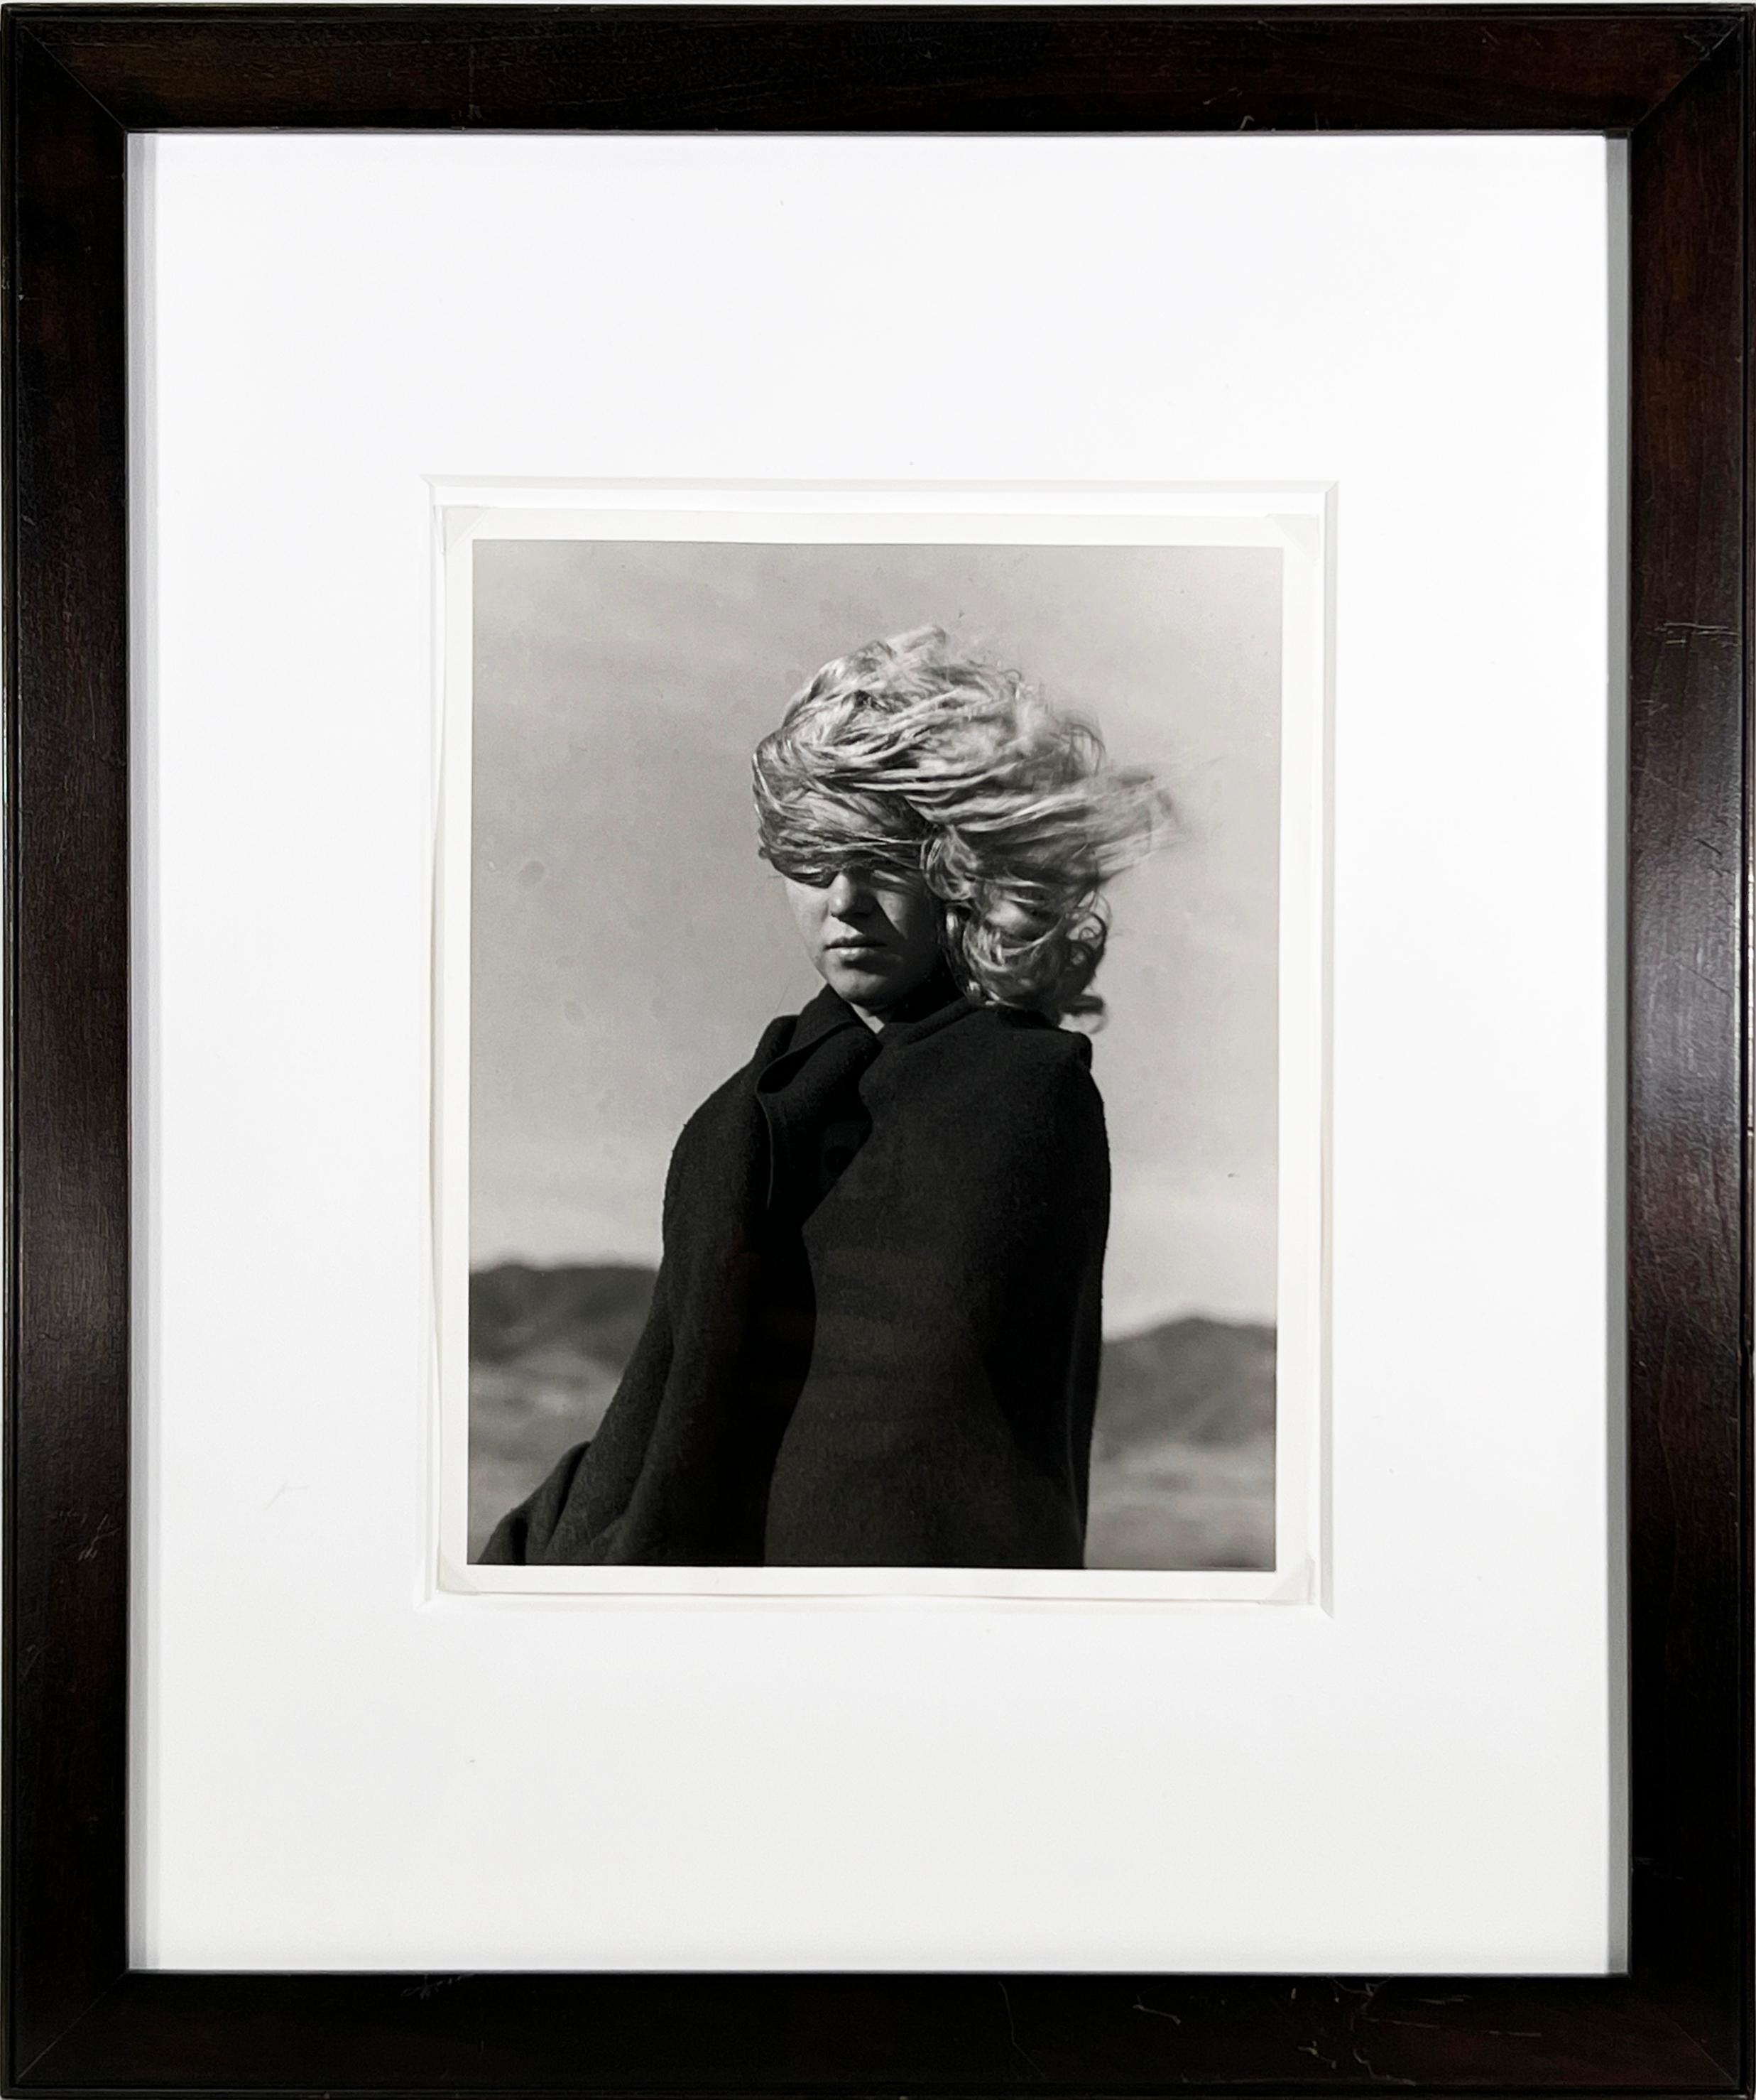 Marilyn Monroe, Malibu - Photograph by Andre de Dienes